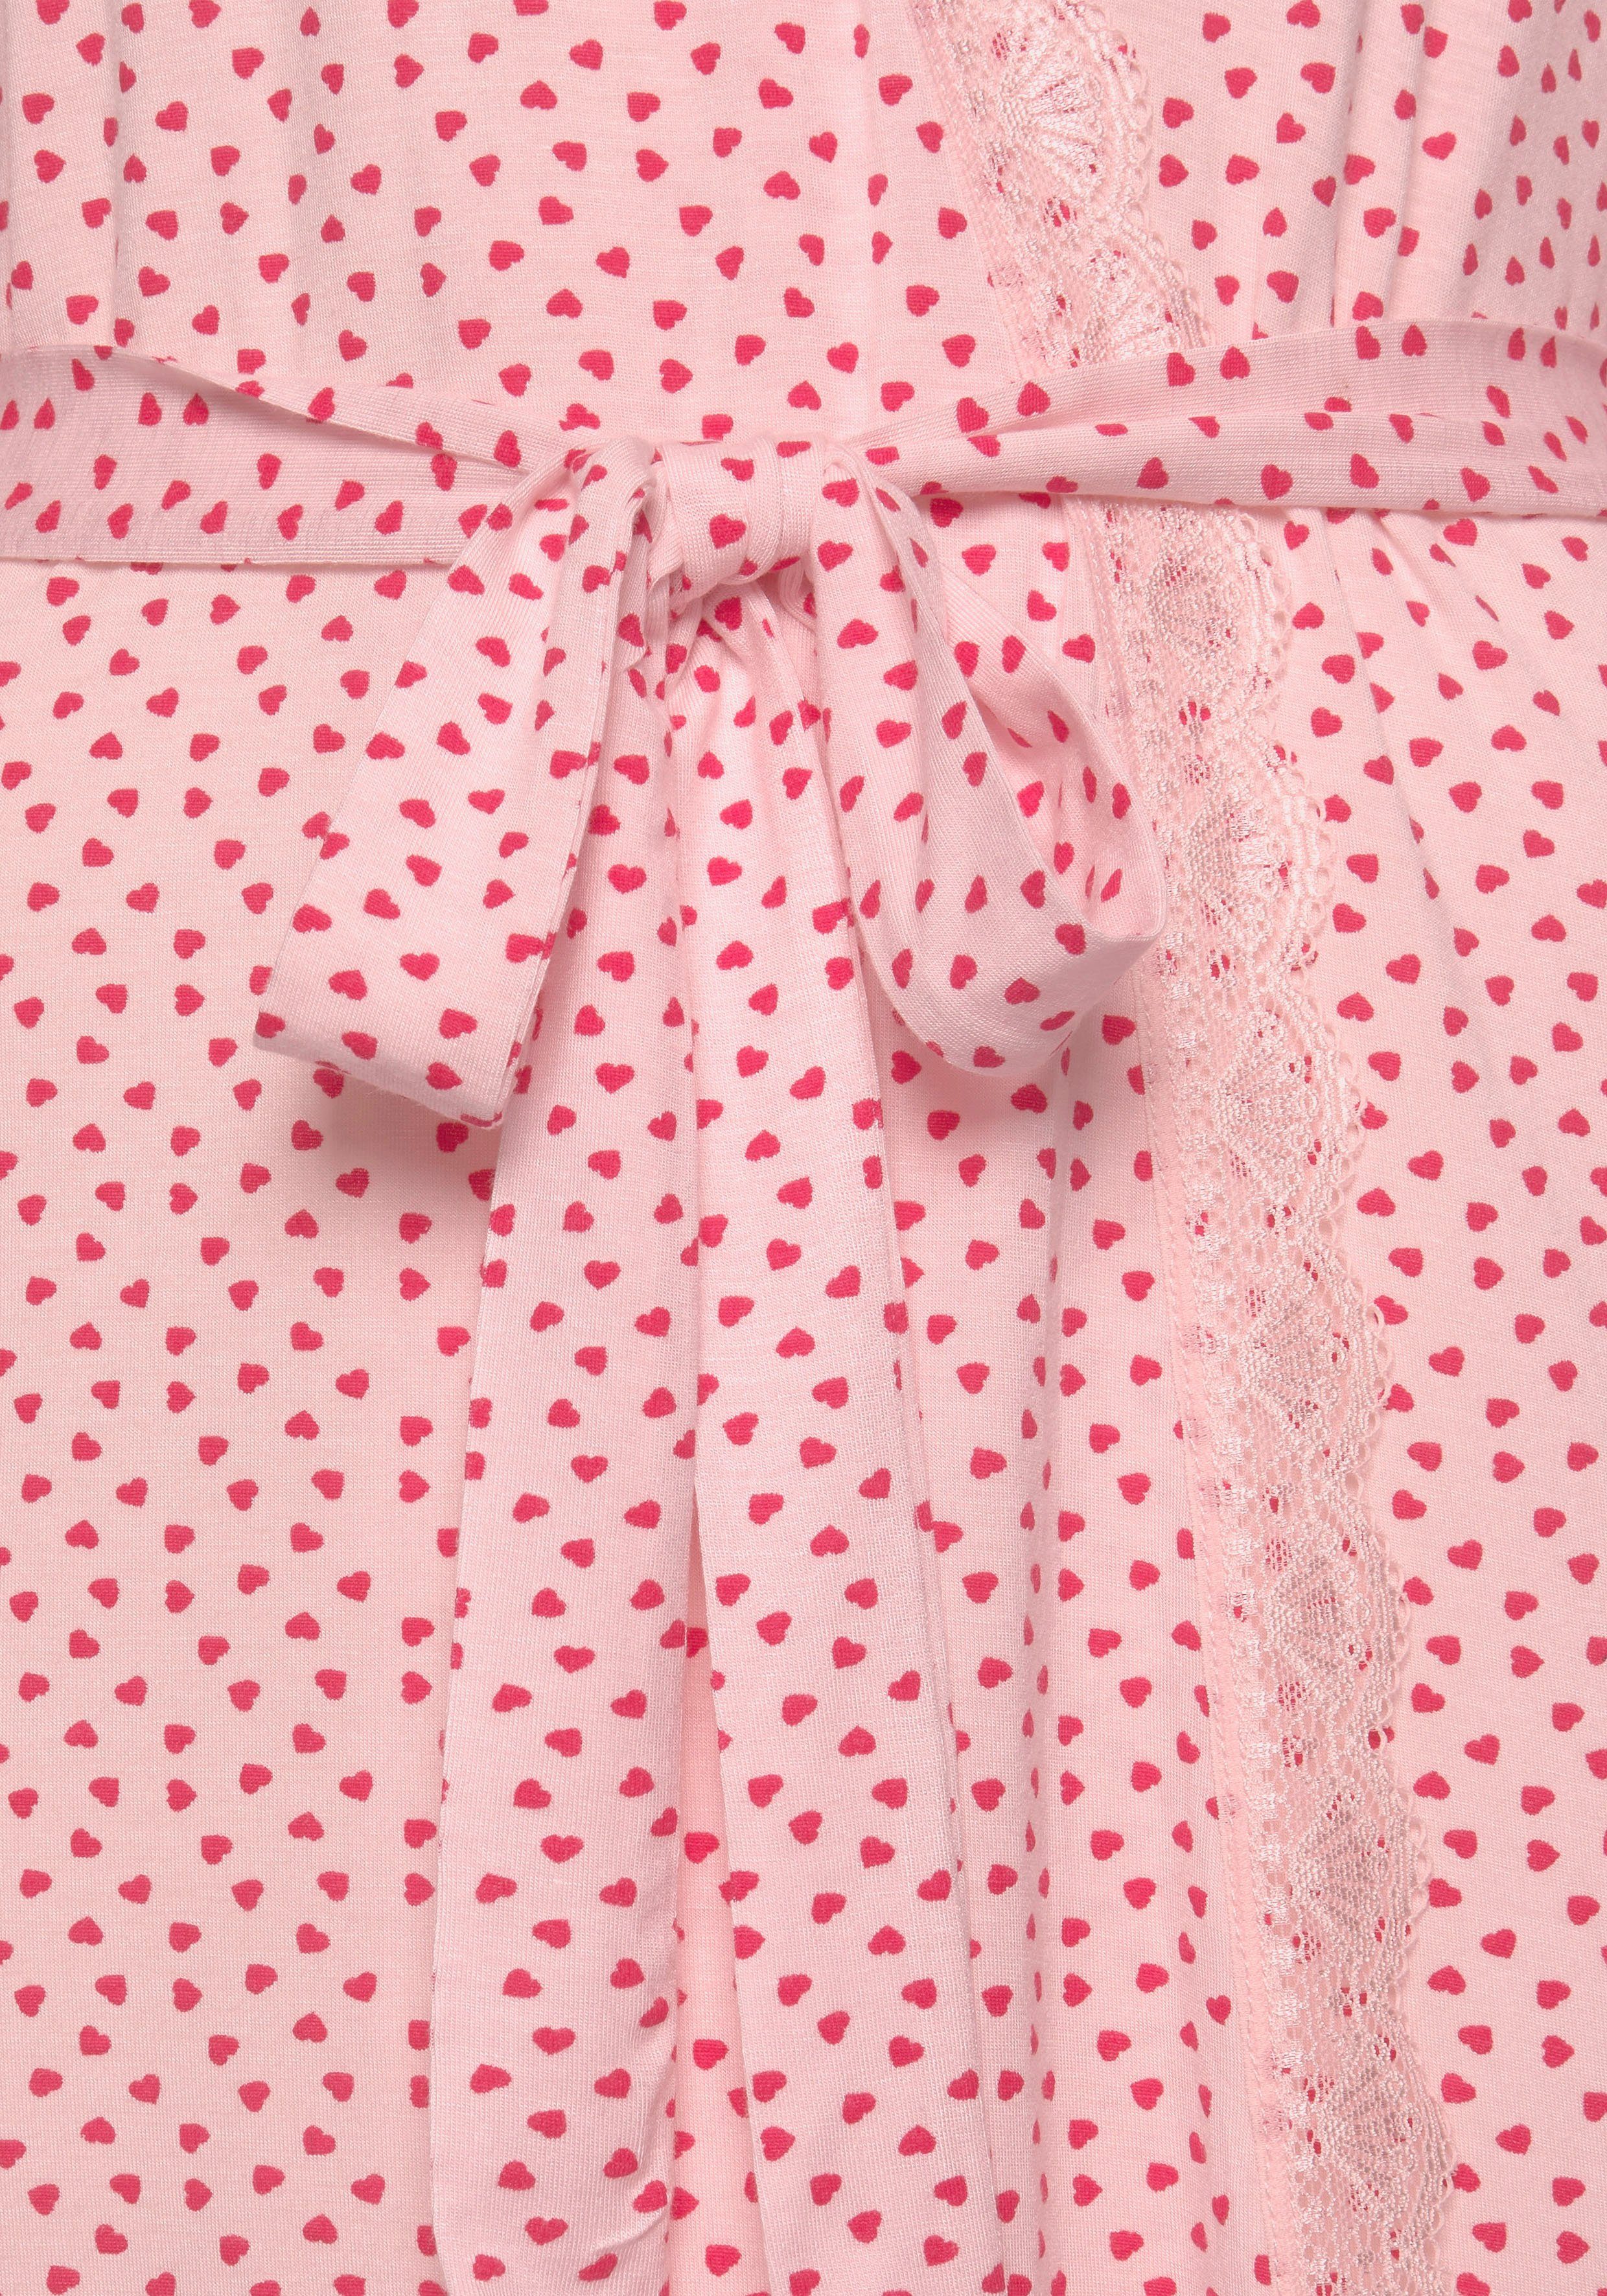 hellrosa-gemustert Single-Jersey, mit Kurzform, Gürtel, Spitze s.Oliver und Kimono, Herzchendruck